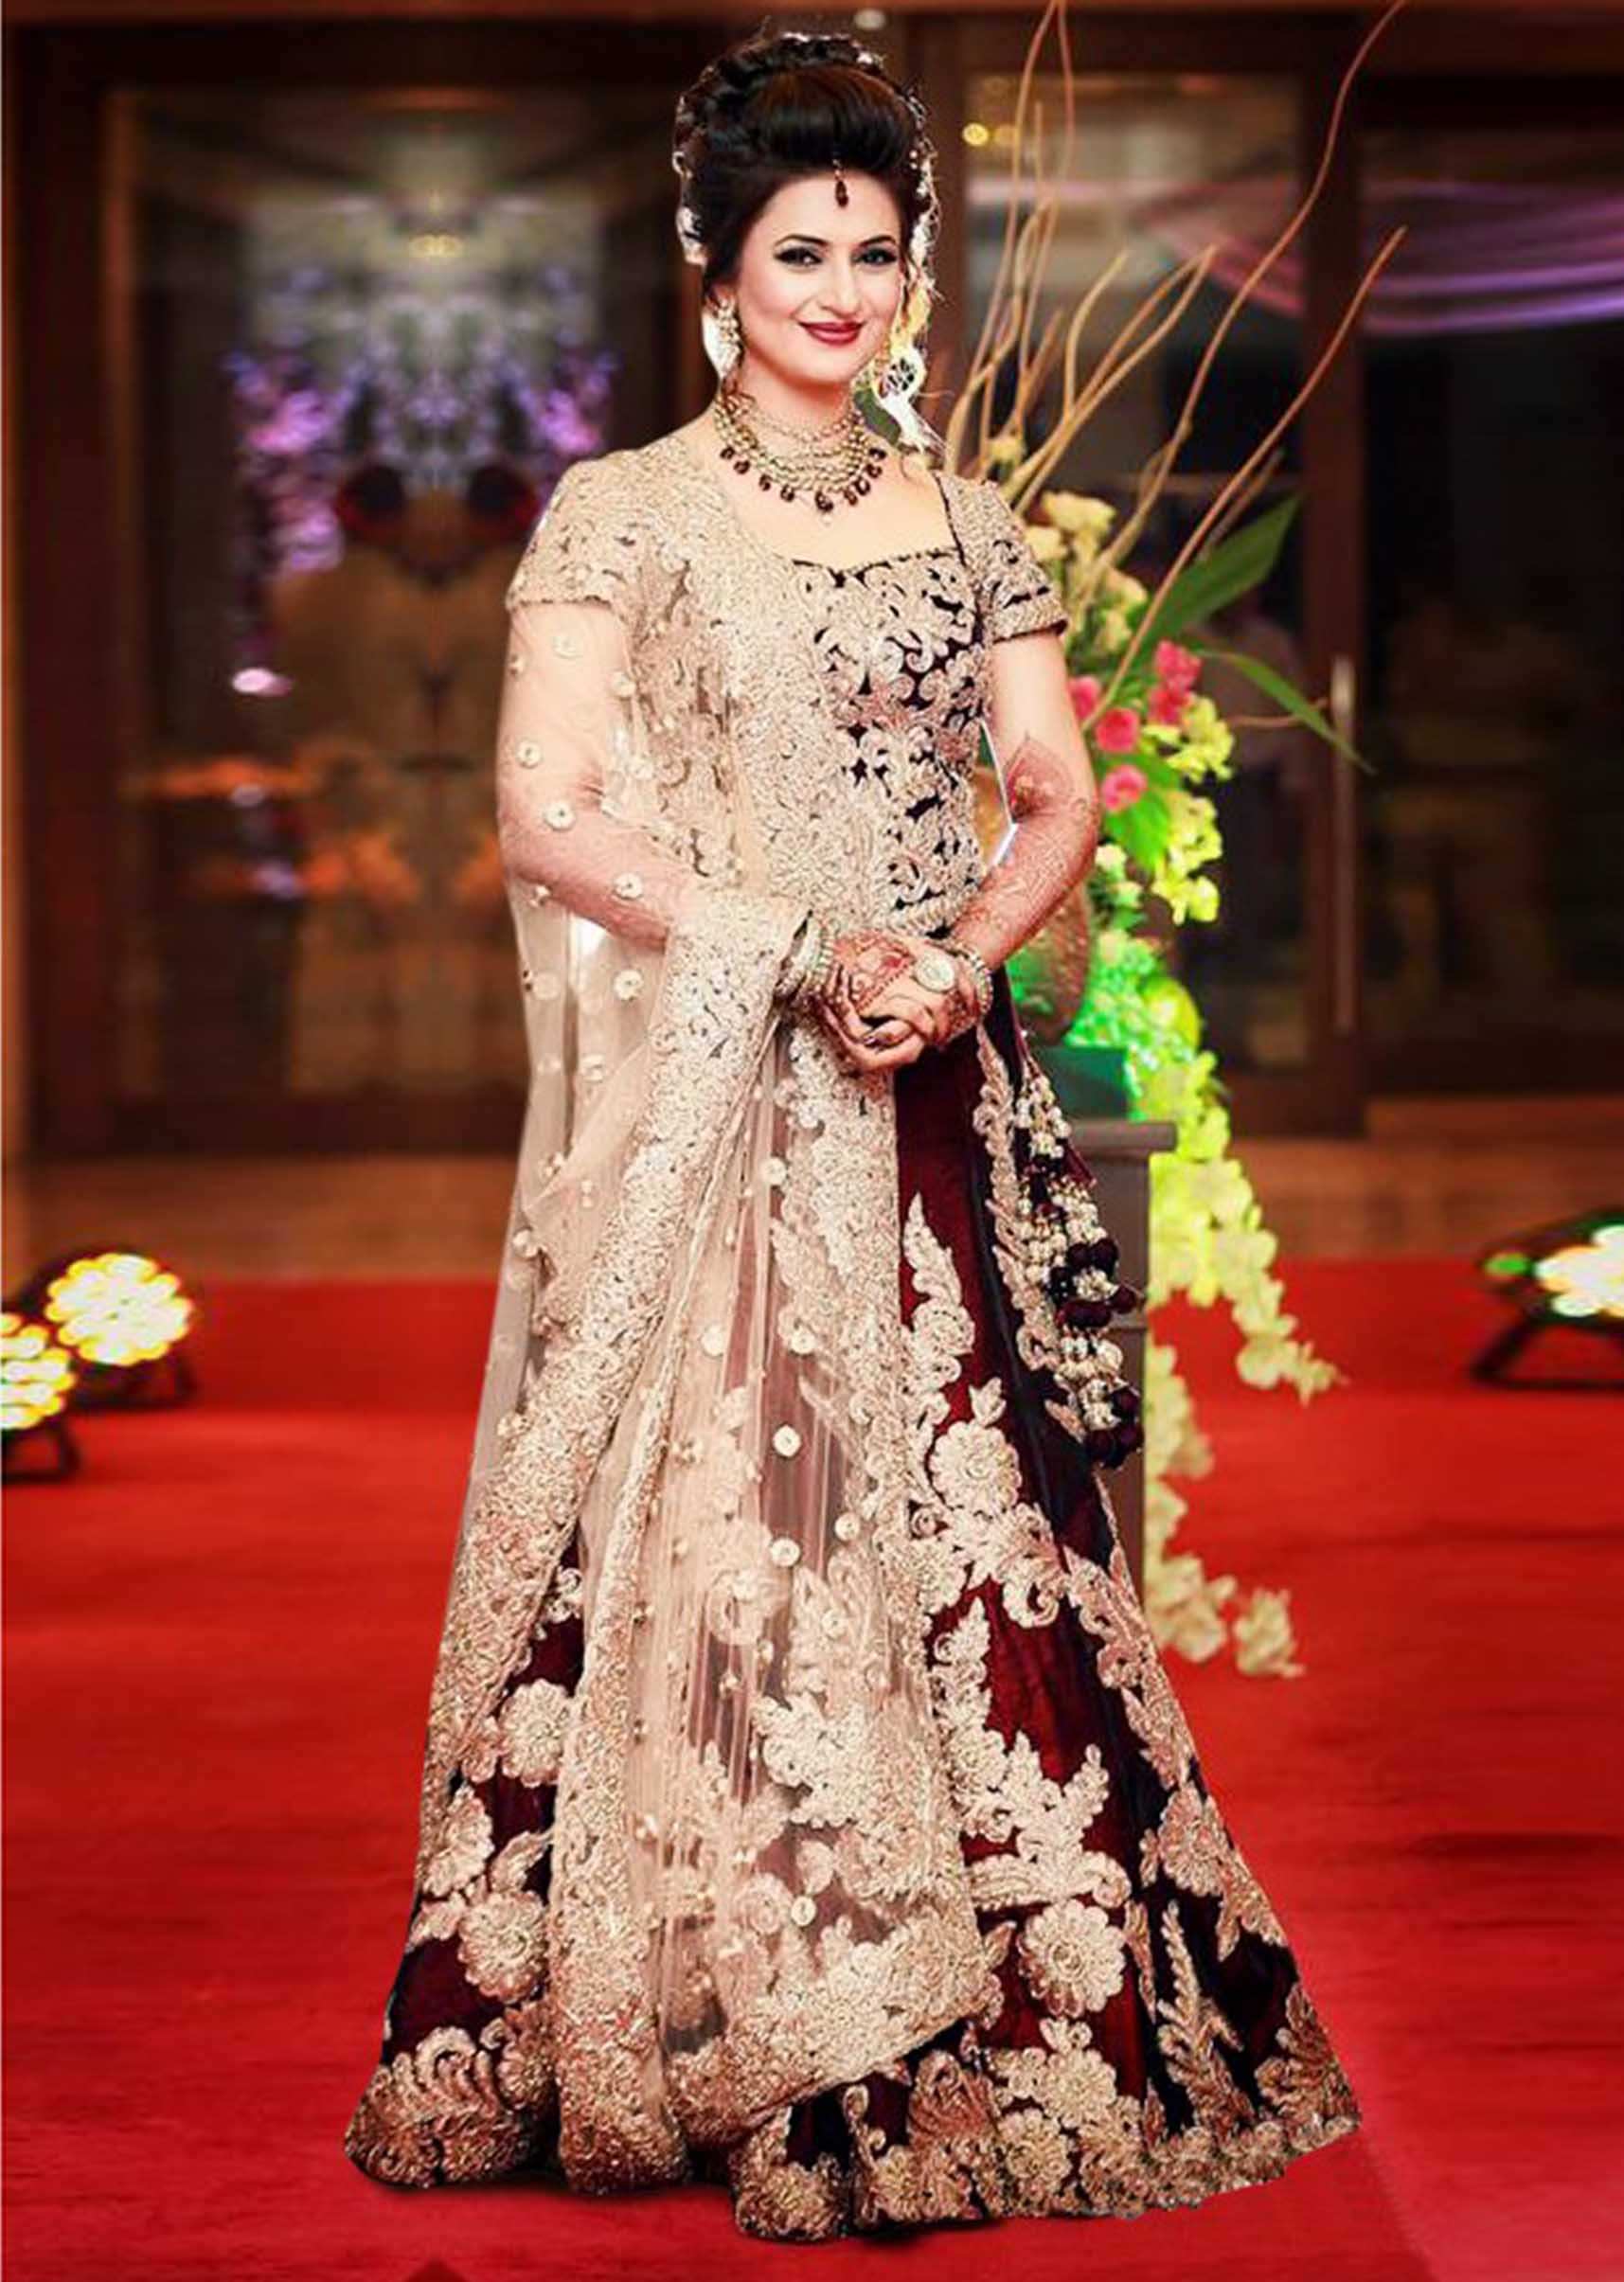 Divyanka Tripathi in kalki maroon lehenga at her reception